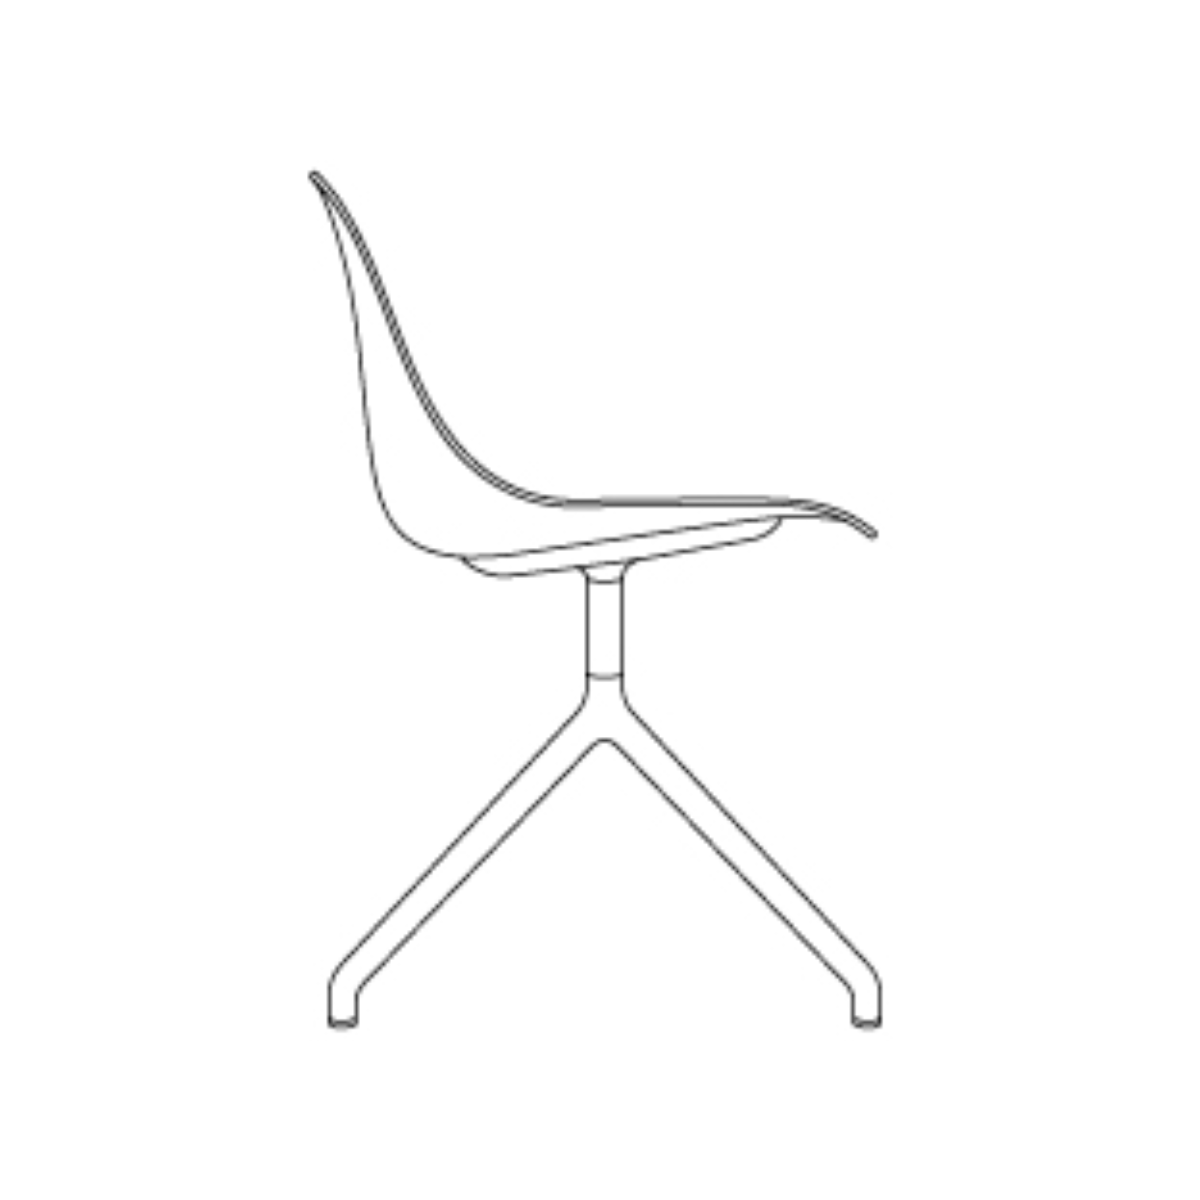 unupholstered - Fiber chair without armrest swivel base